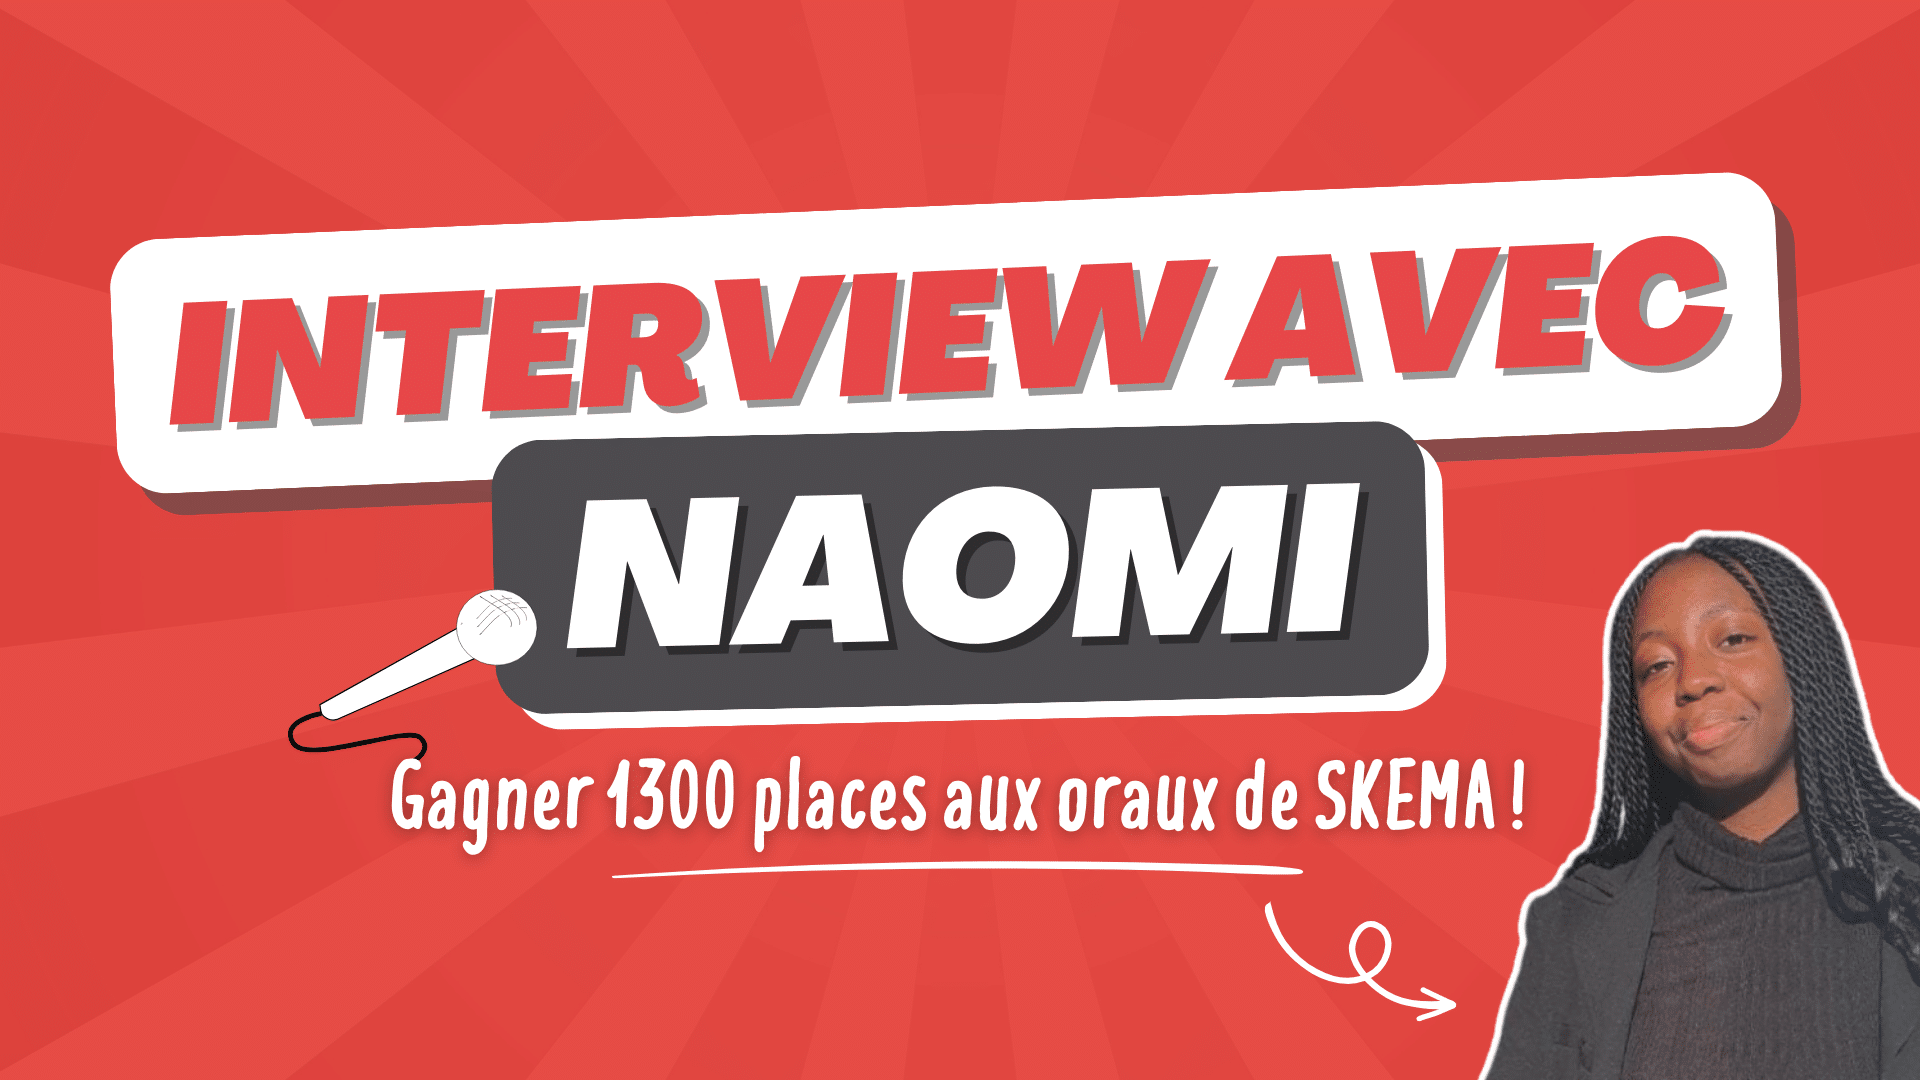 interview naomi oraux skema